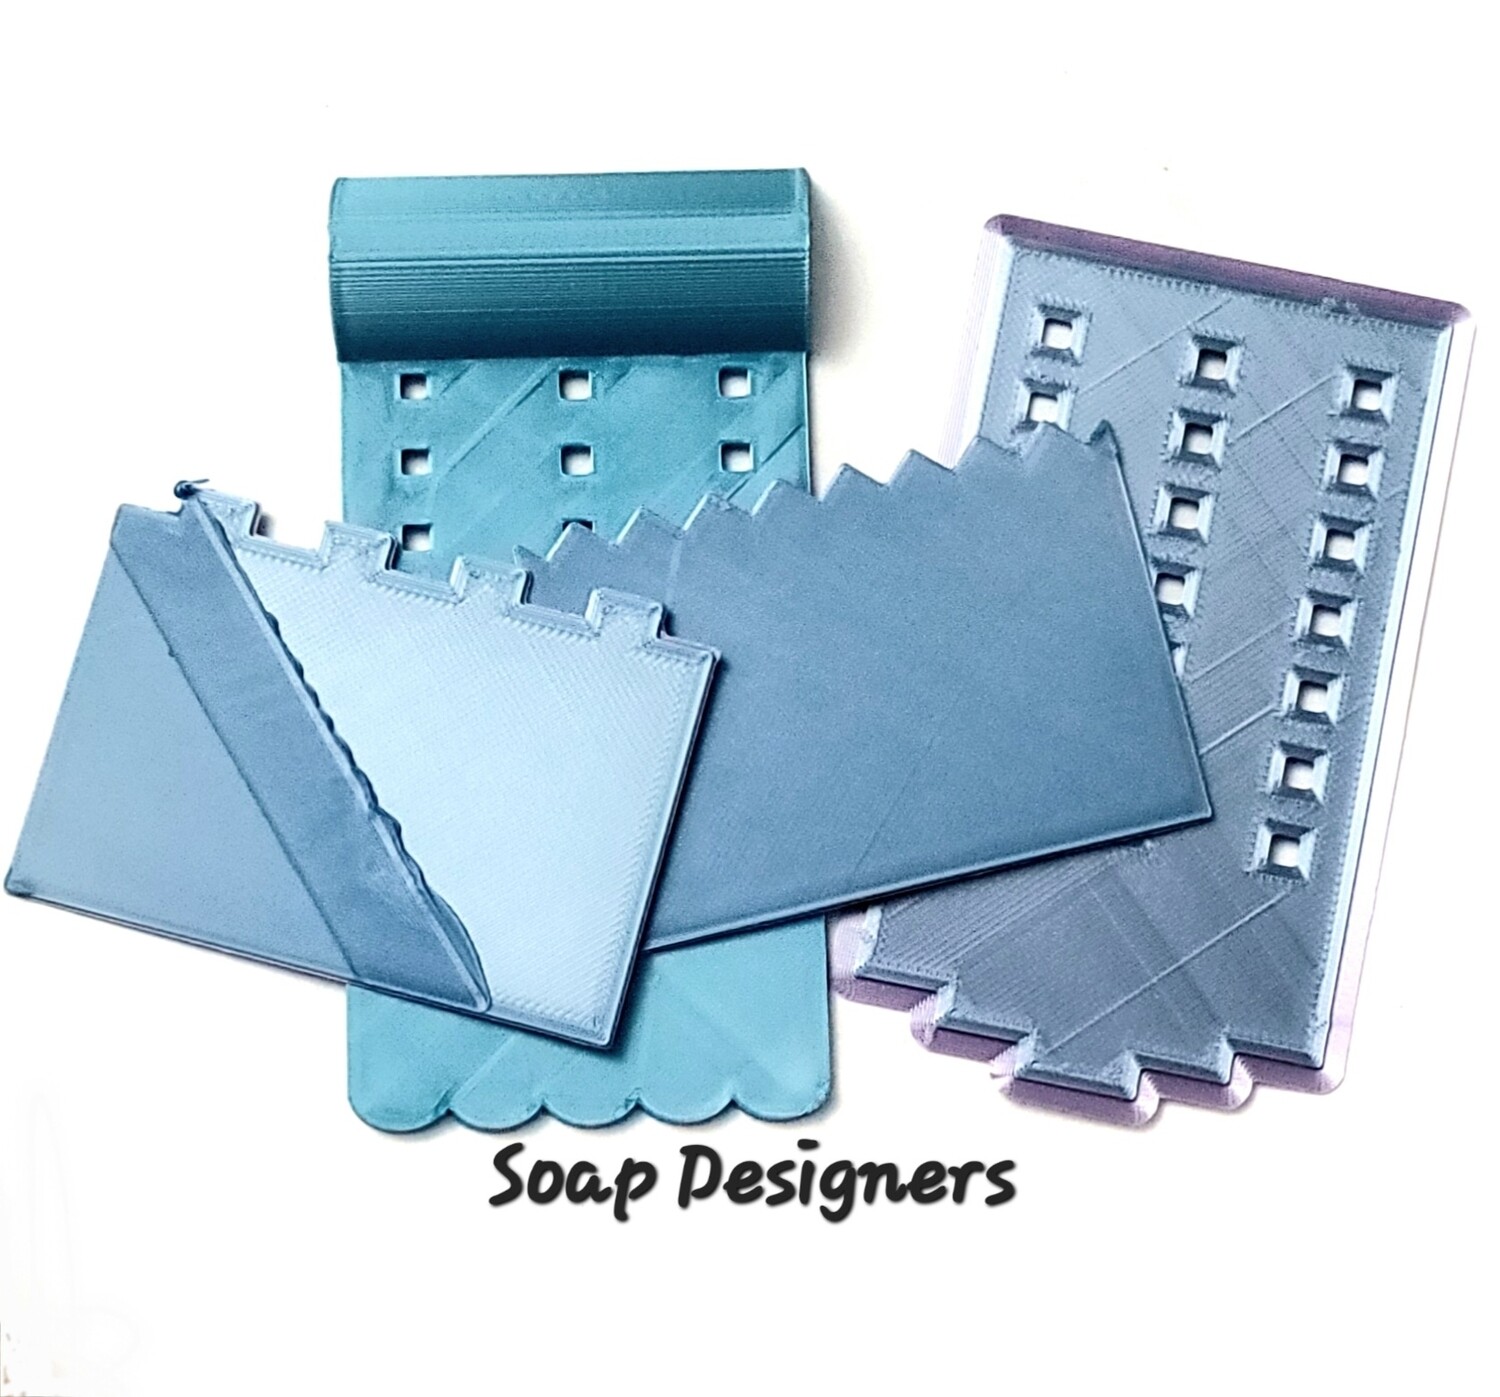 Soap Designers